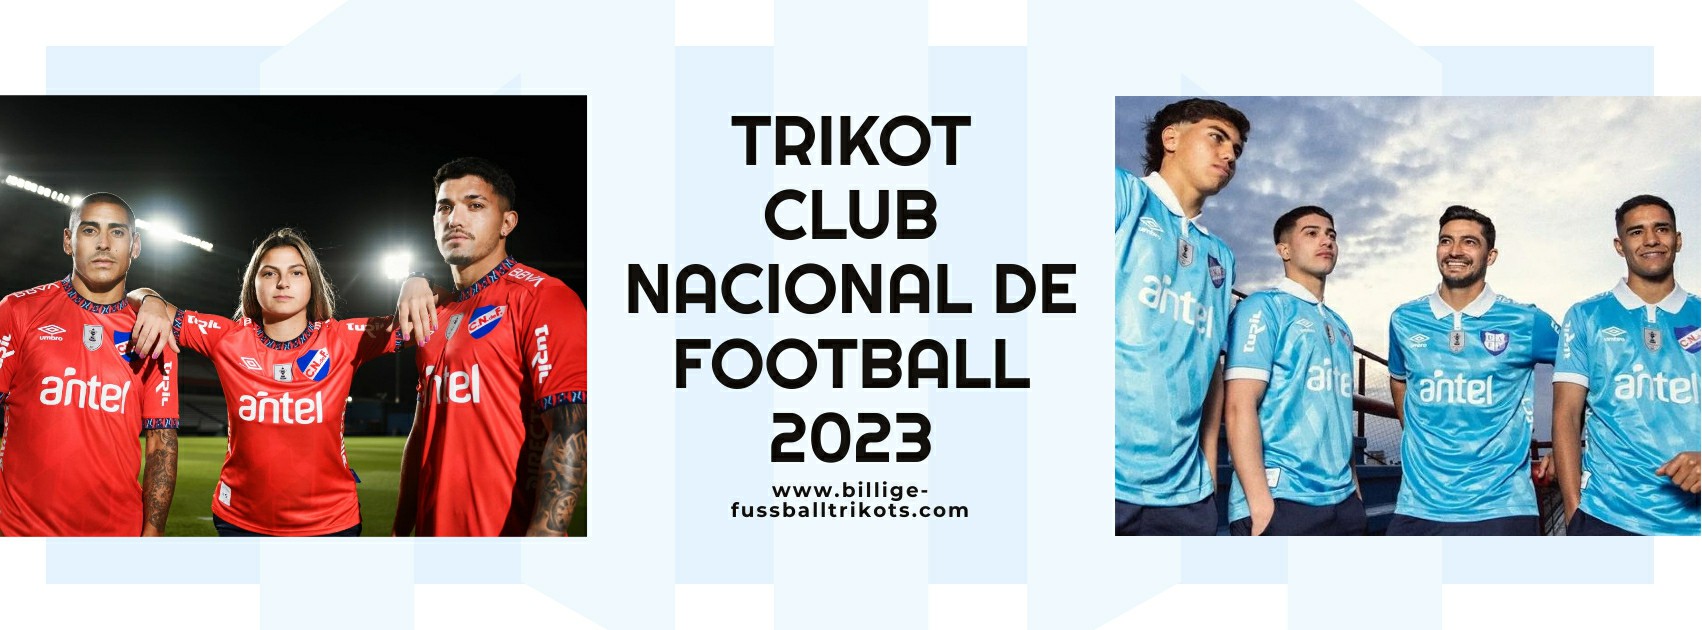 Club Nacional de Football Trikot 2023-2024